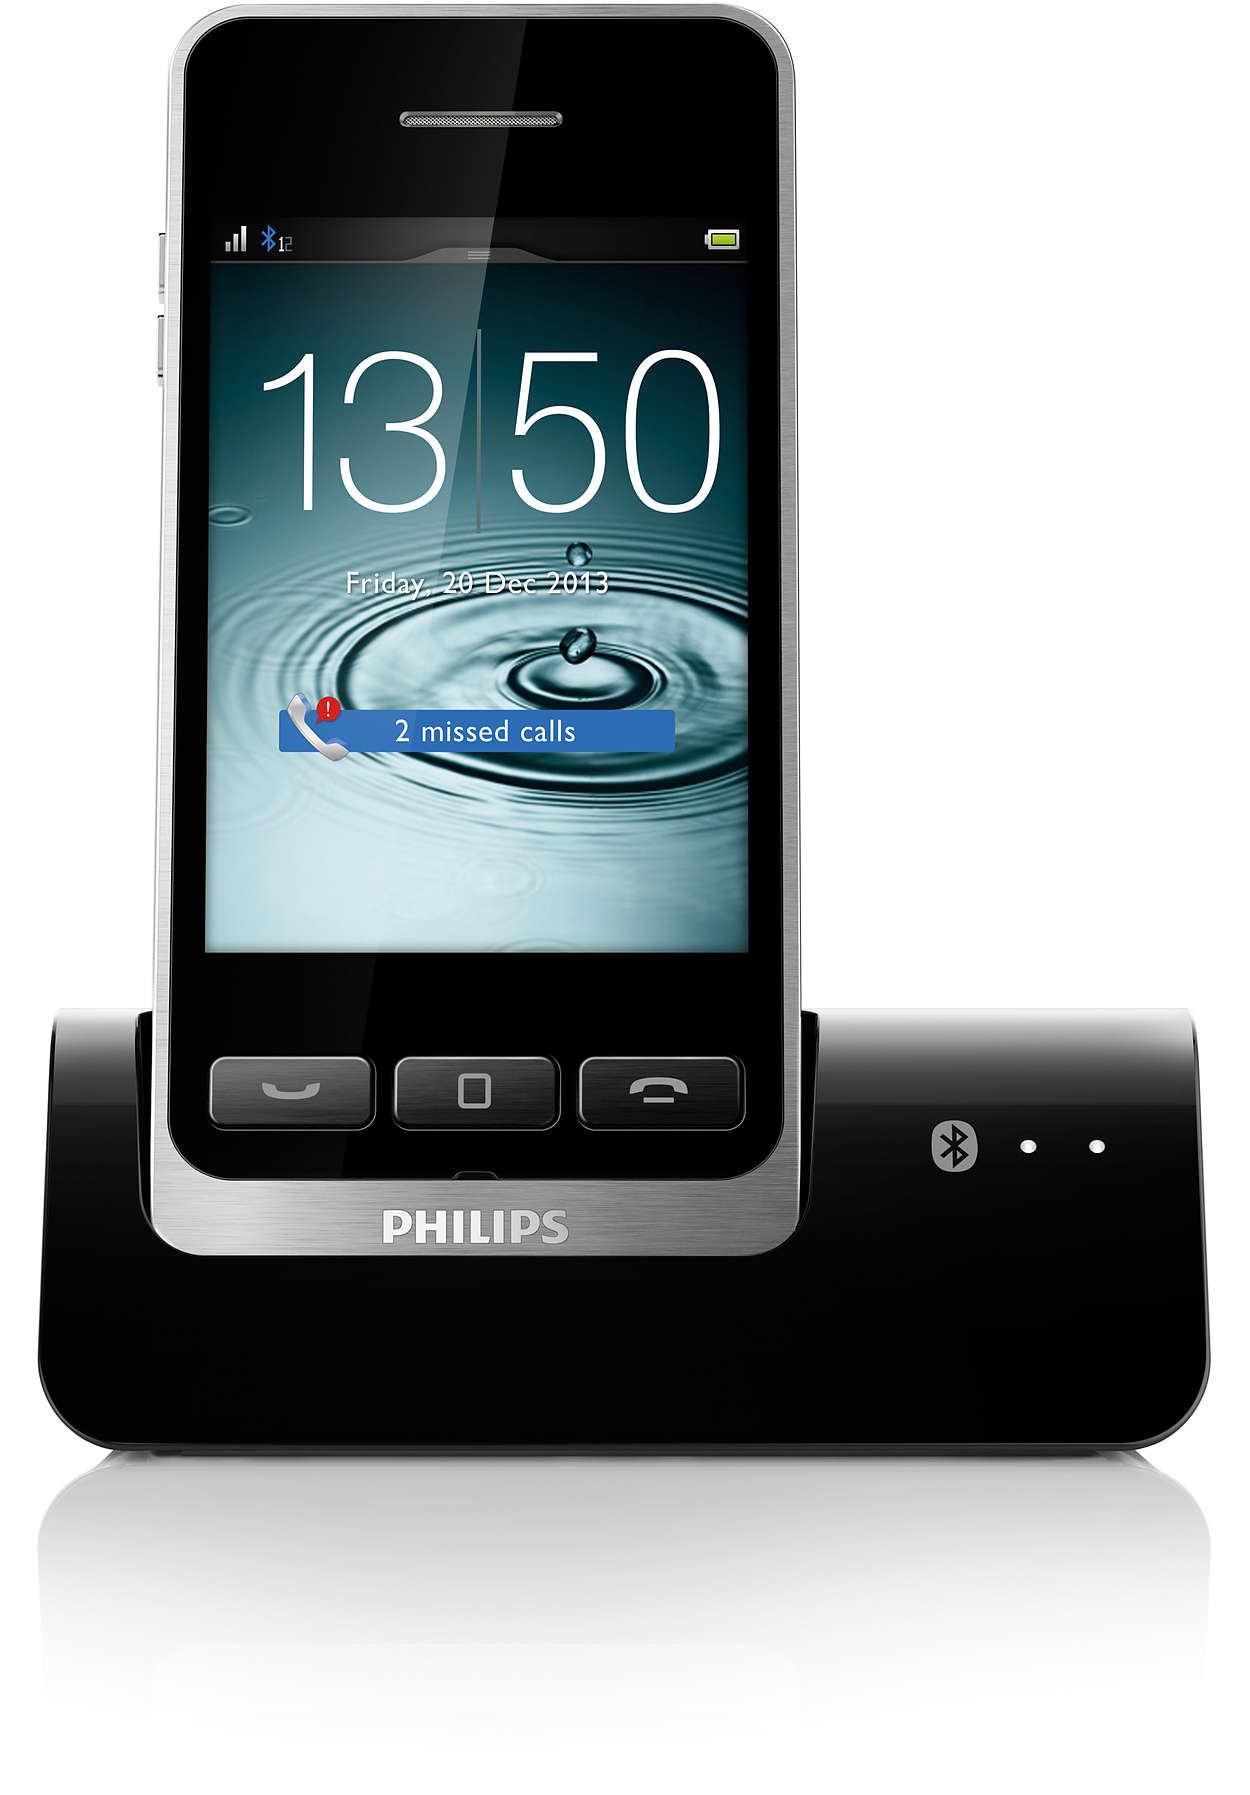 Филипс сайт интернет. Philips s 10. Сенсорный радиотелефон Филипс. Сенсорный радиотелефон DECT Philips. Philips 602 смартфон.